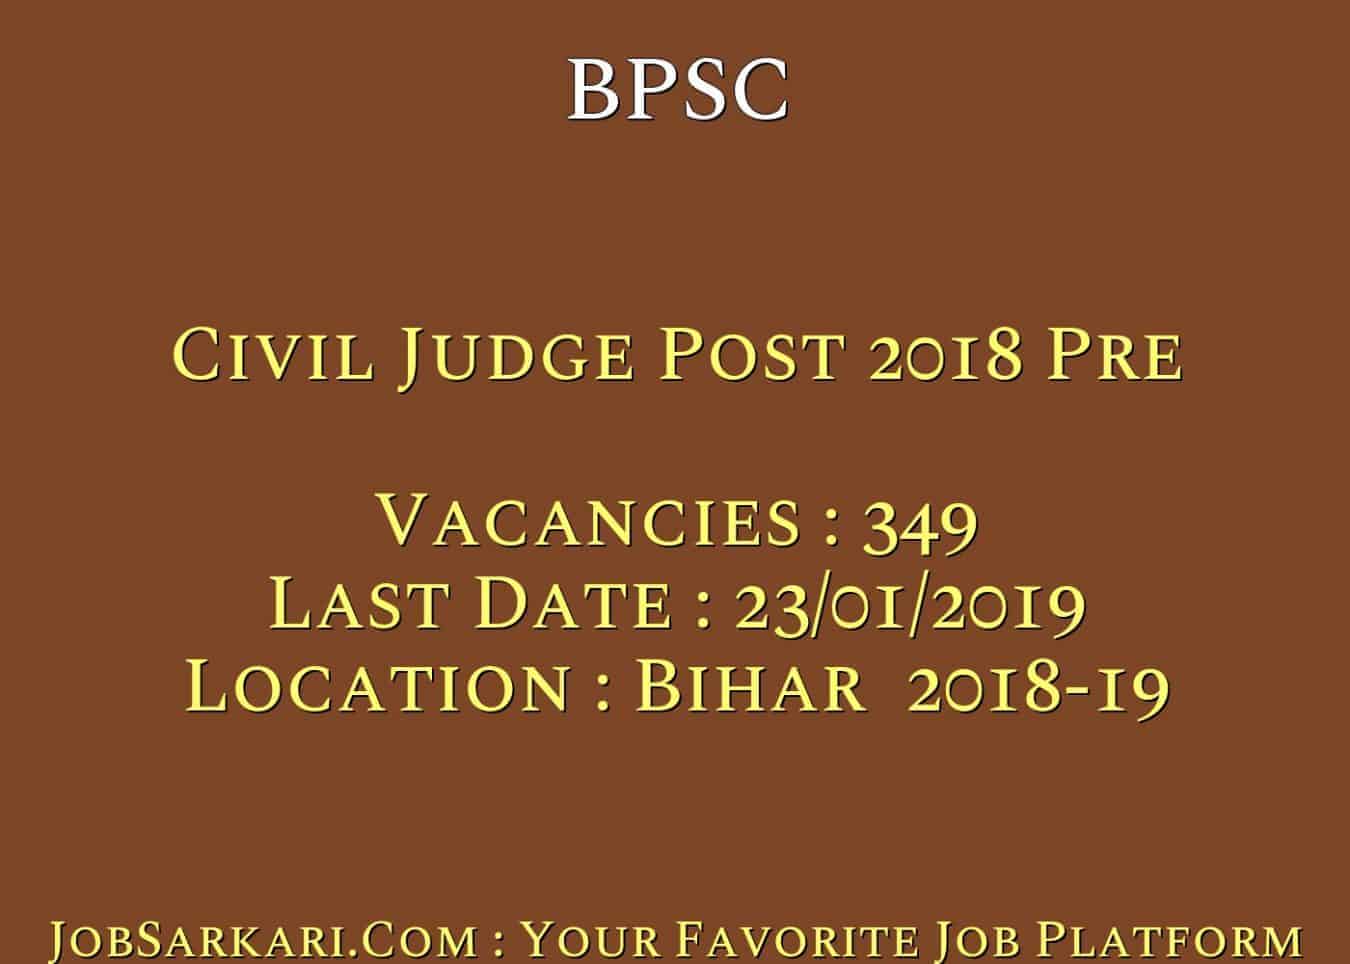 BPSC Recruitment 2018 For Civil Judge Post